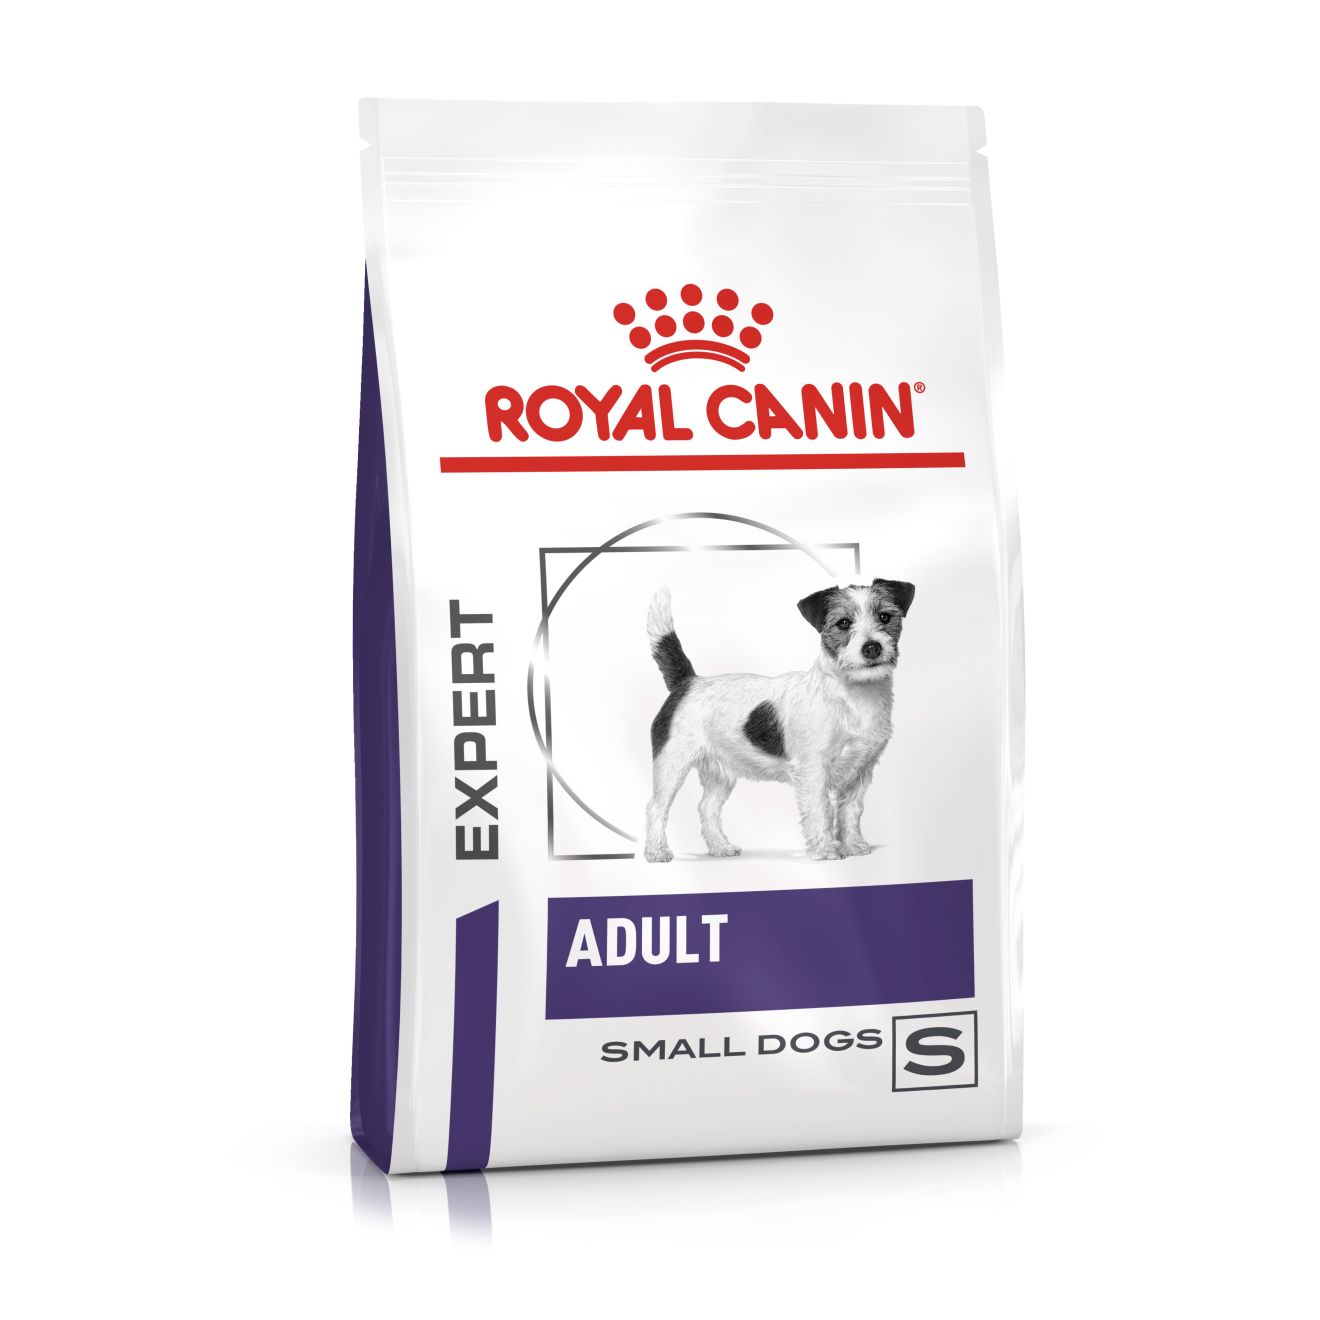 ROYAL CANIN Expert ADULT SMALL DOGS Trockenfutter für Hunde 